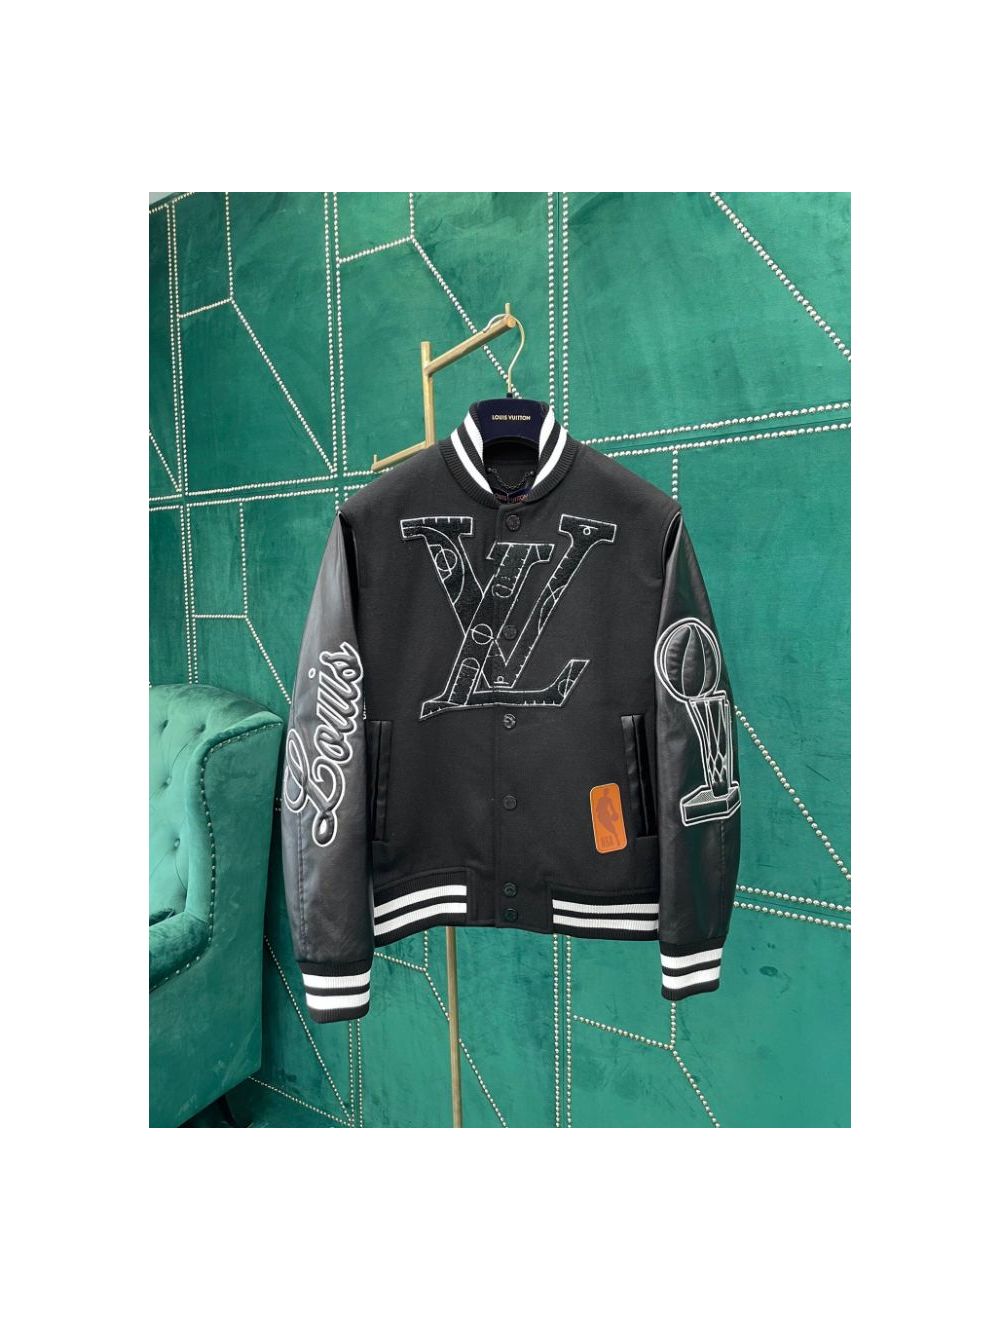 Louis Vuitton x NBA Leather Basketball Jacket : r/ogkicksme